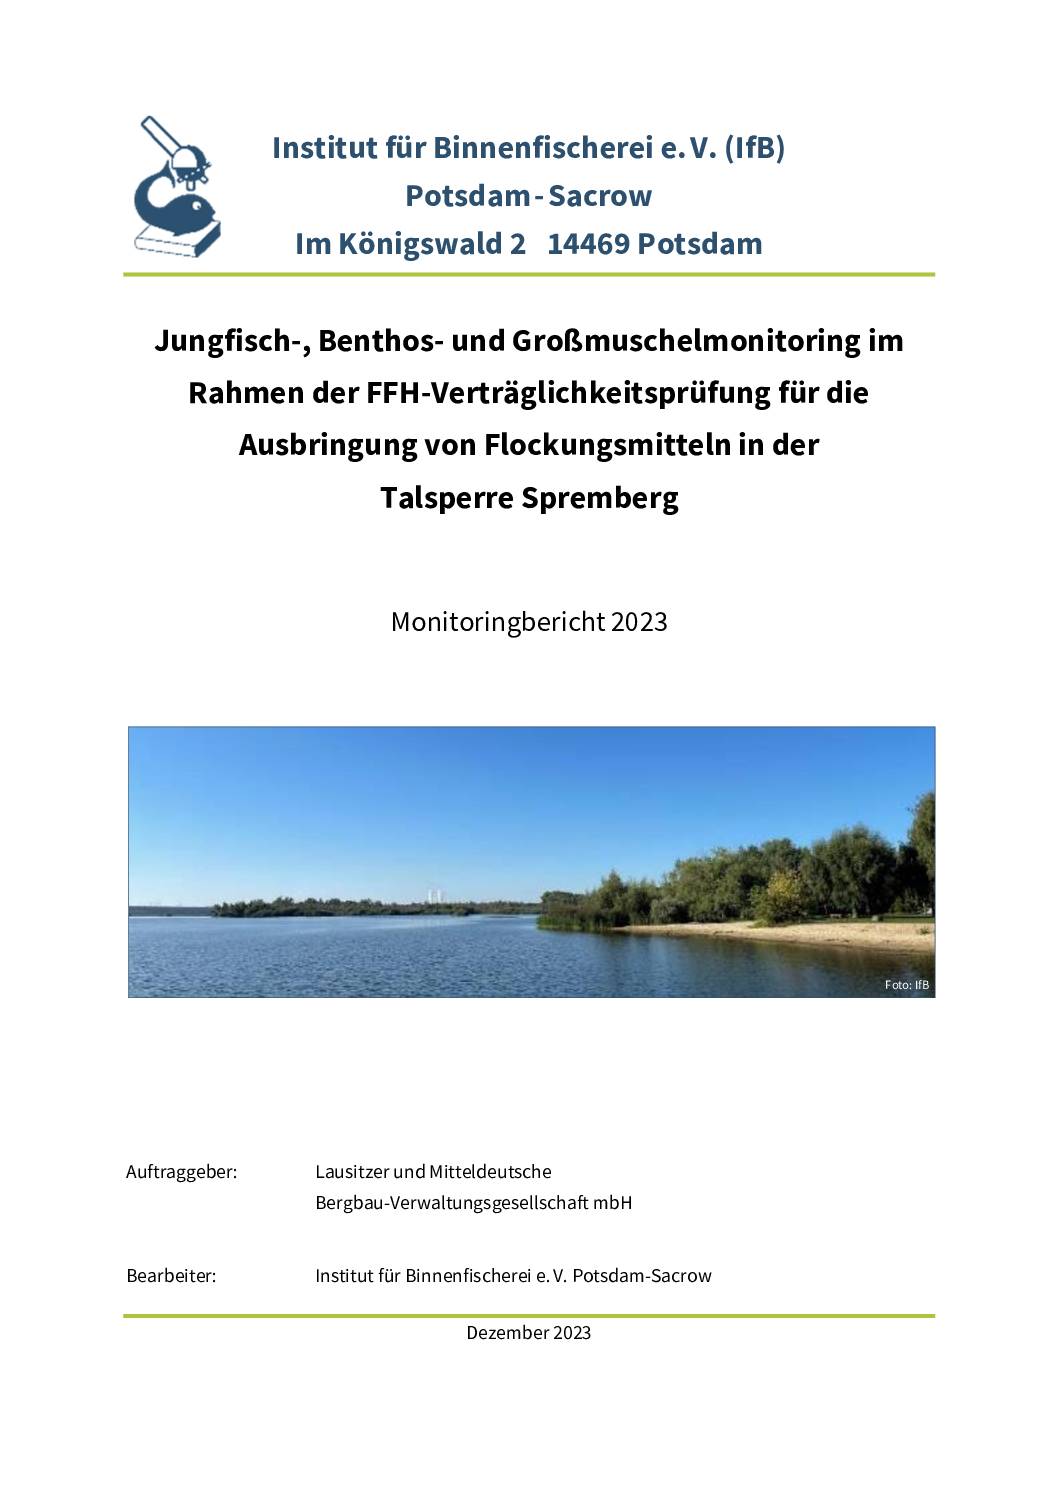 Monitoringbericht 2023 Talsperre Spremberg pdf